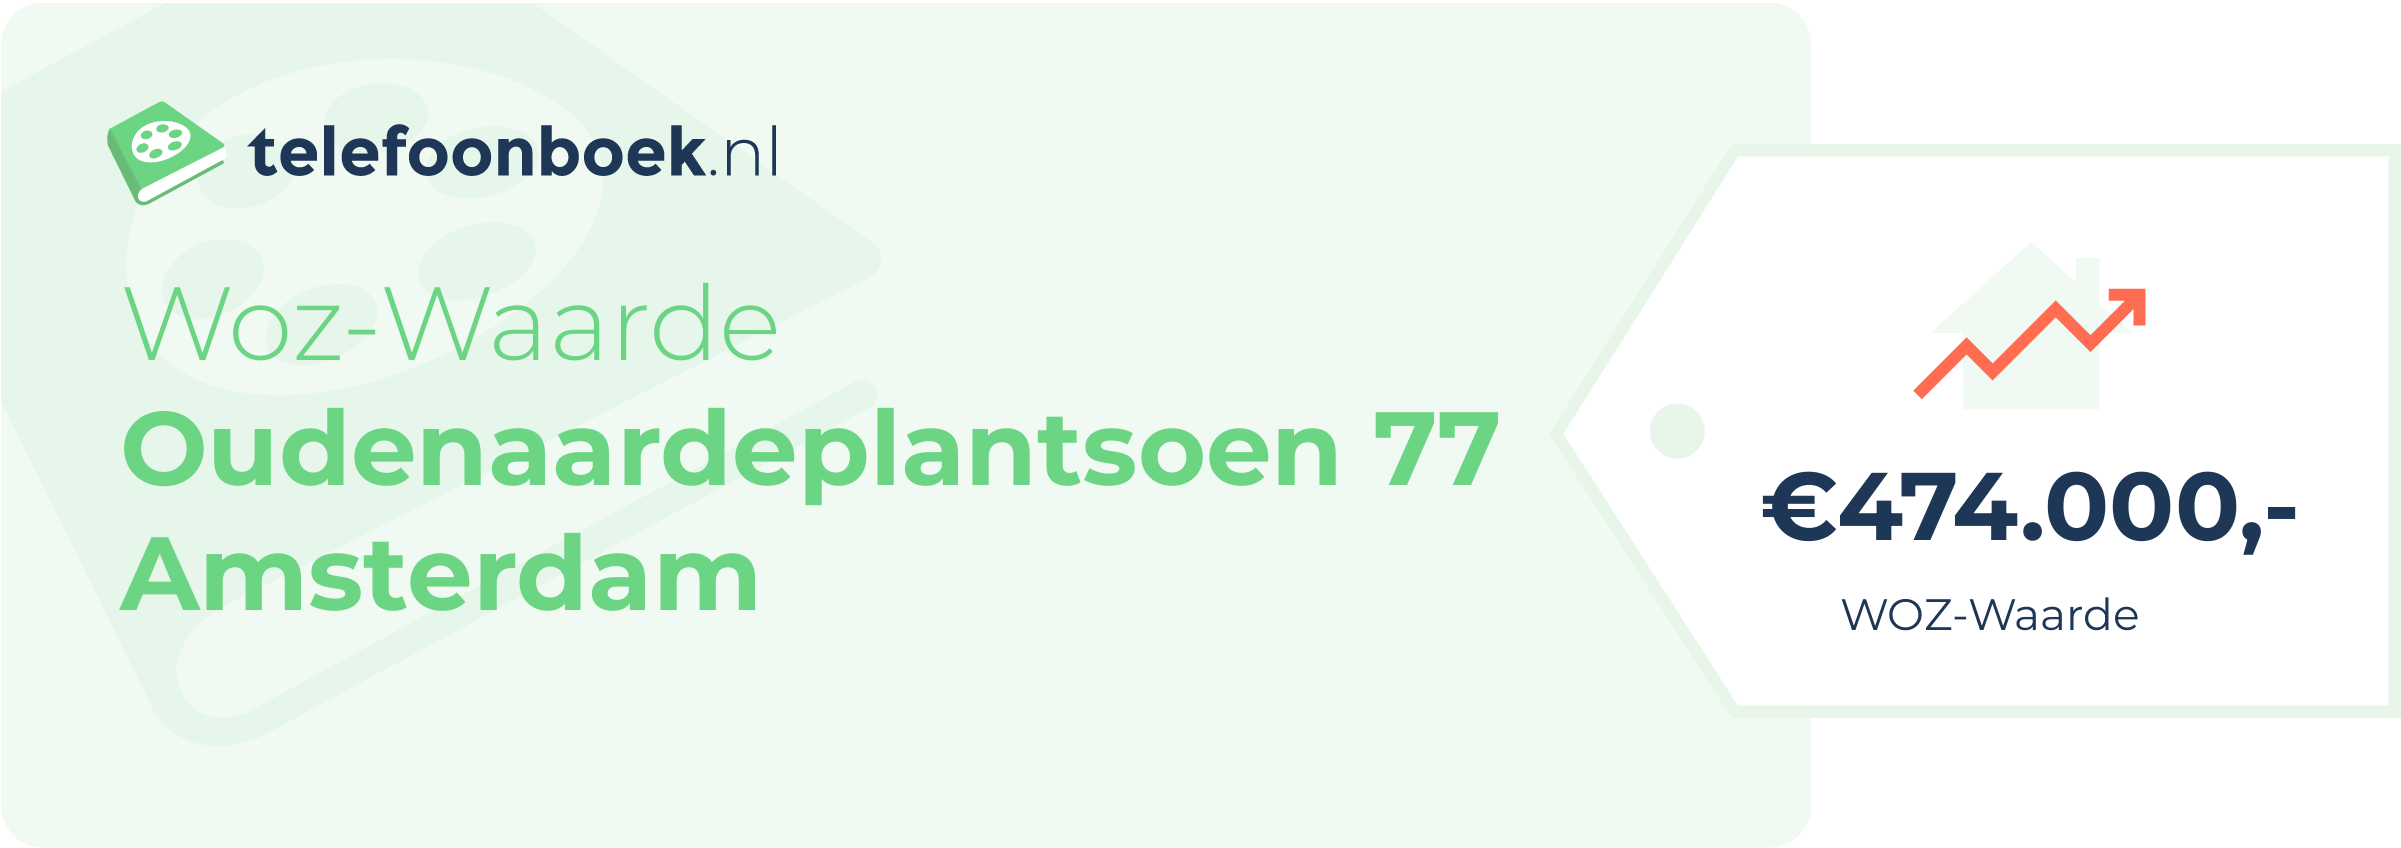 WOZ-waarde Oudenaardeplantsoen 77 Amsterdam